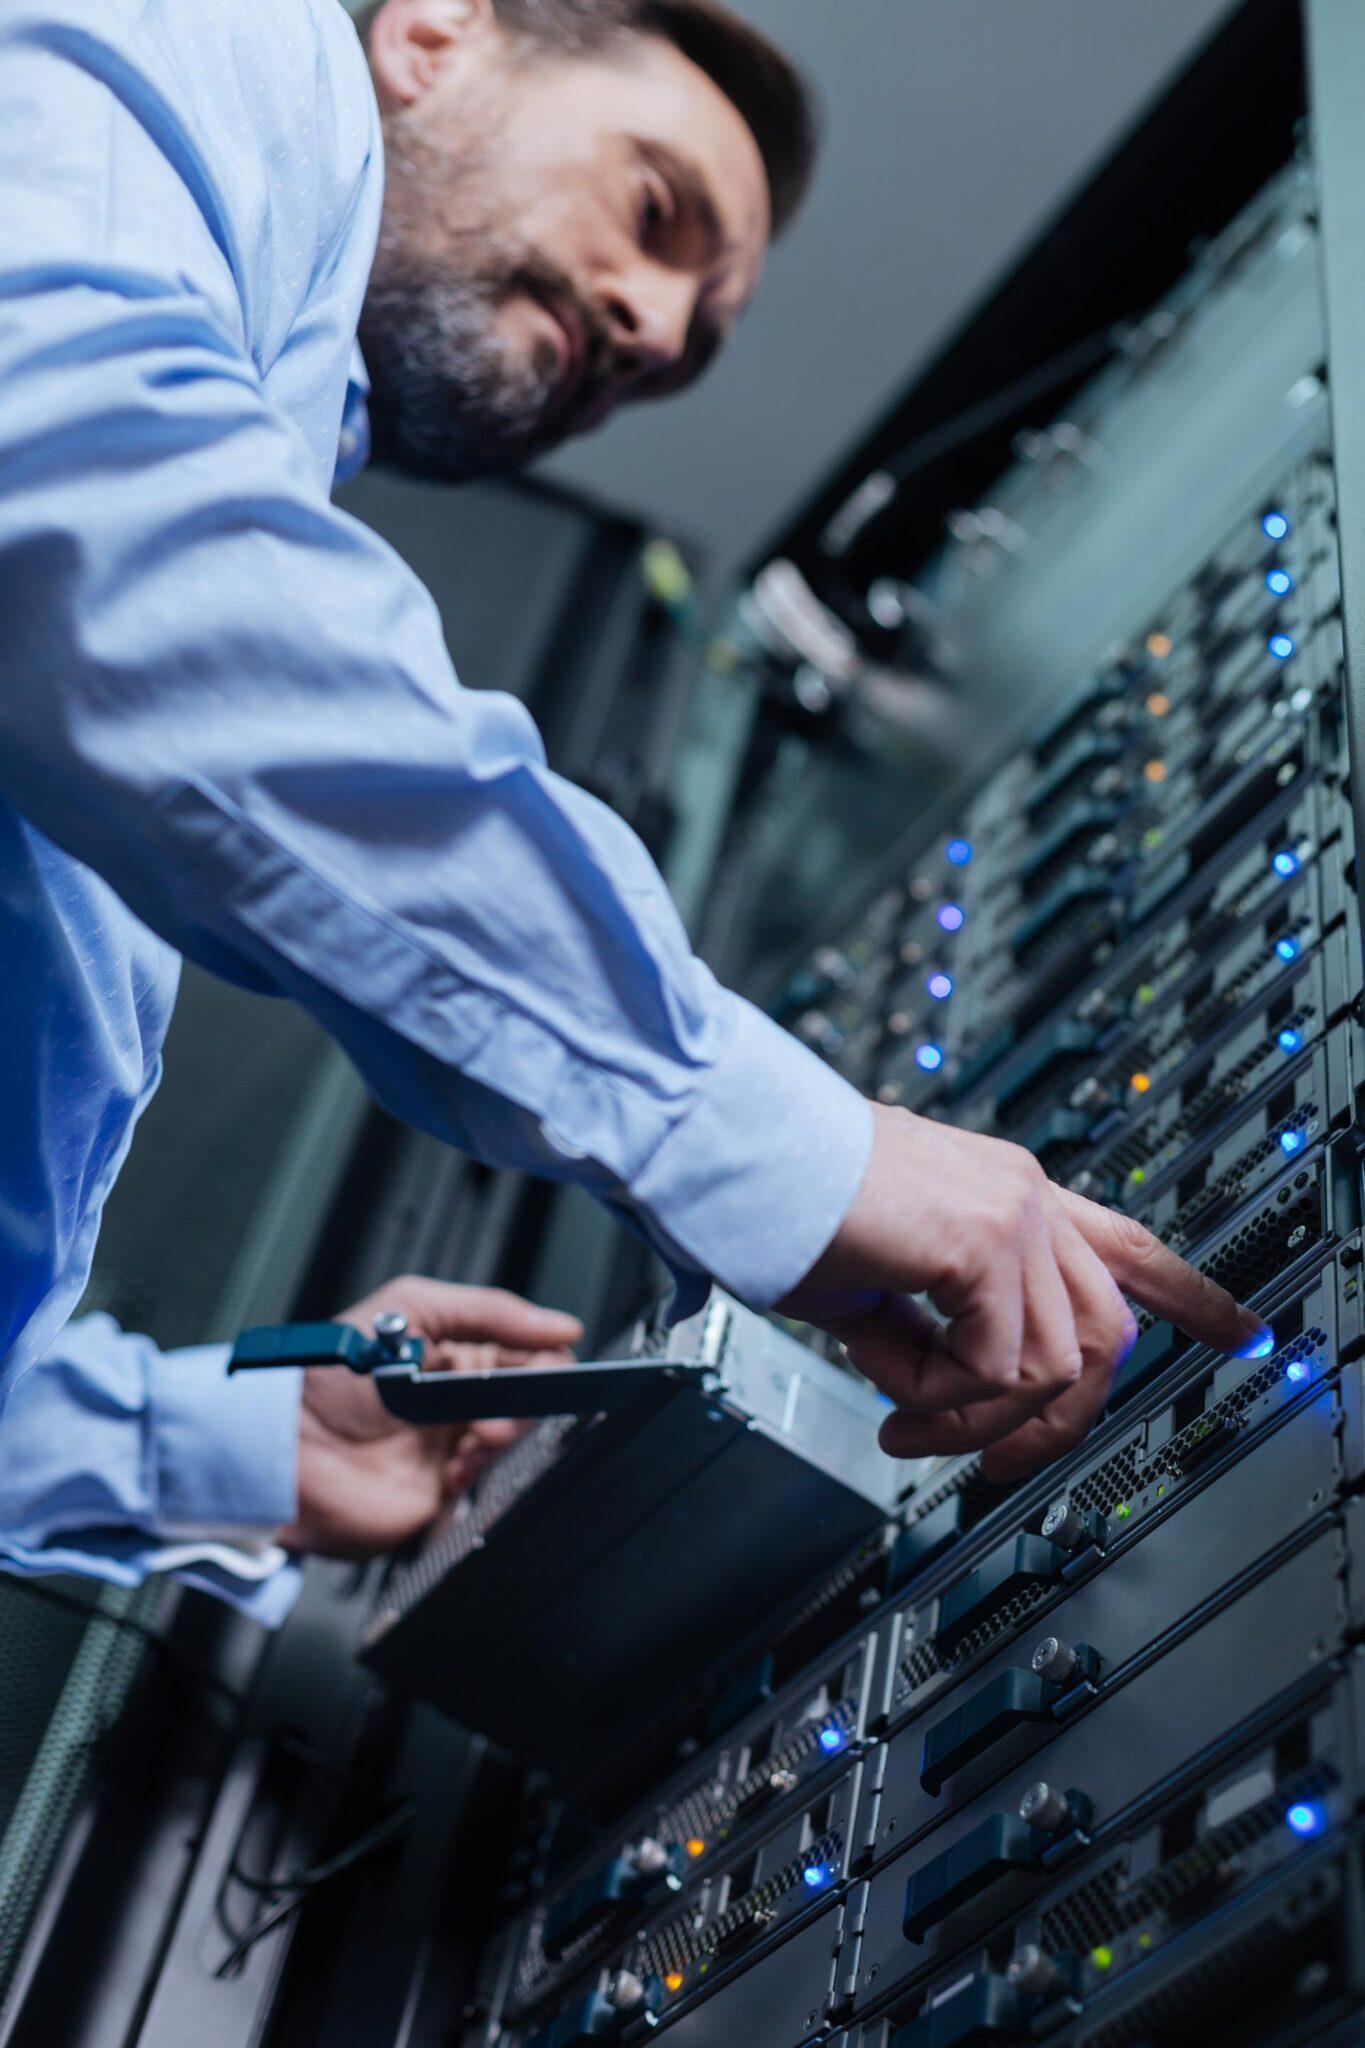 Server technician handling server equipment in a data center